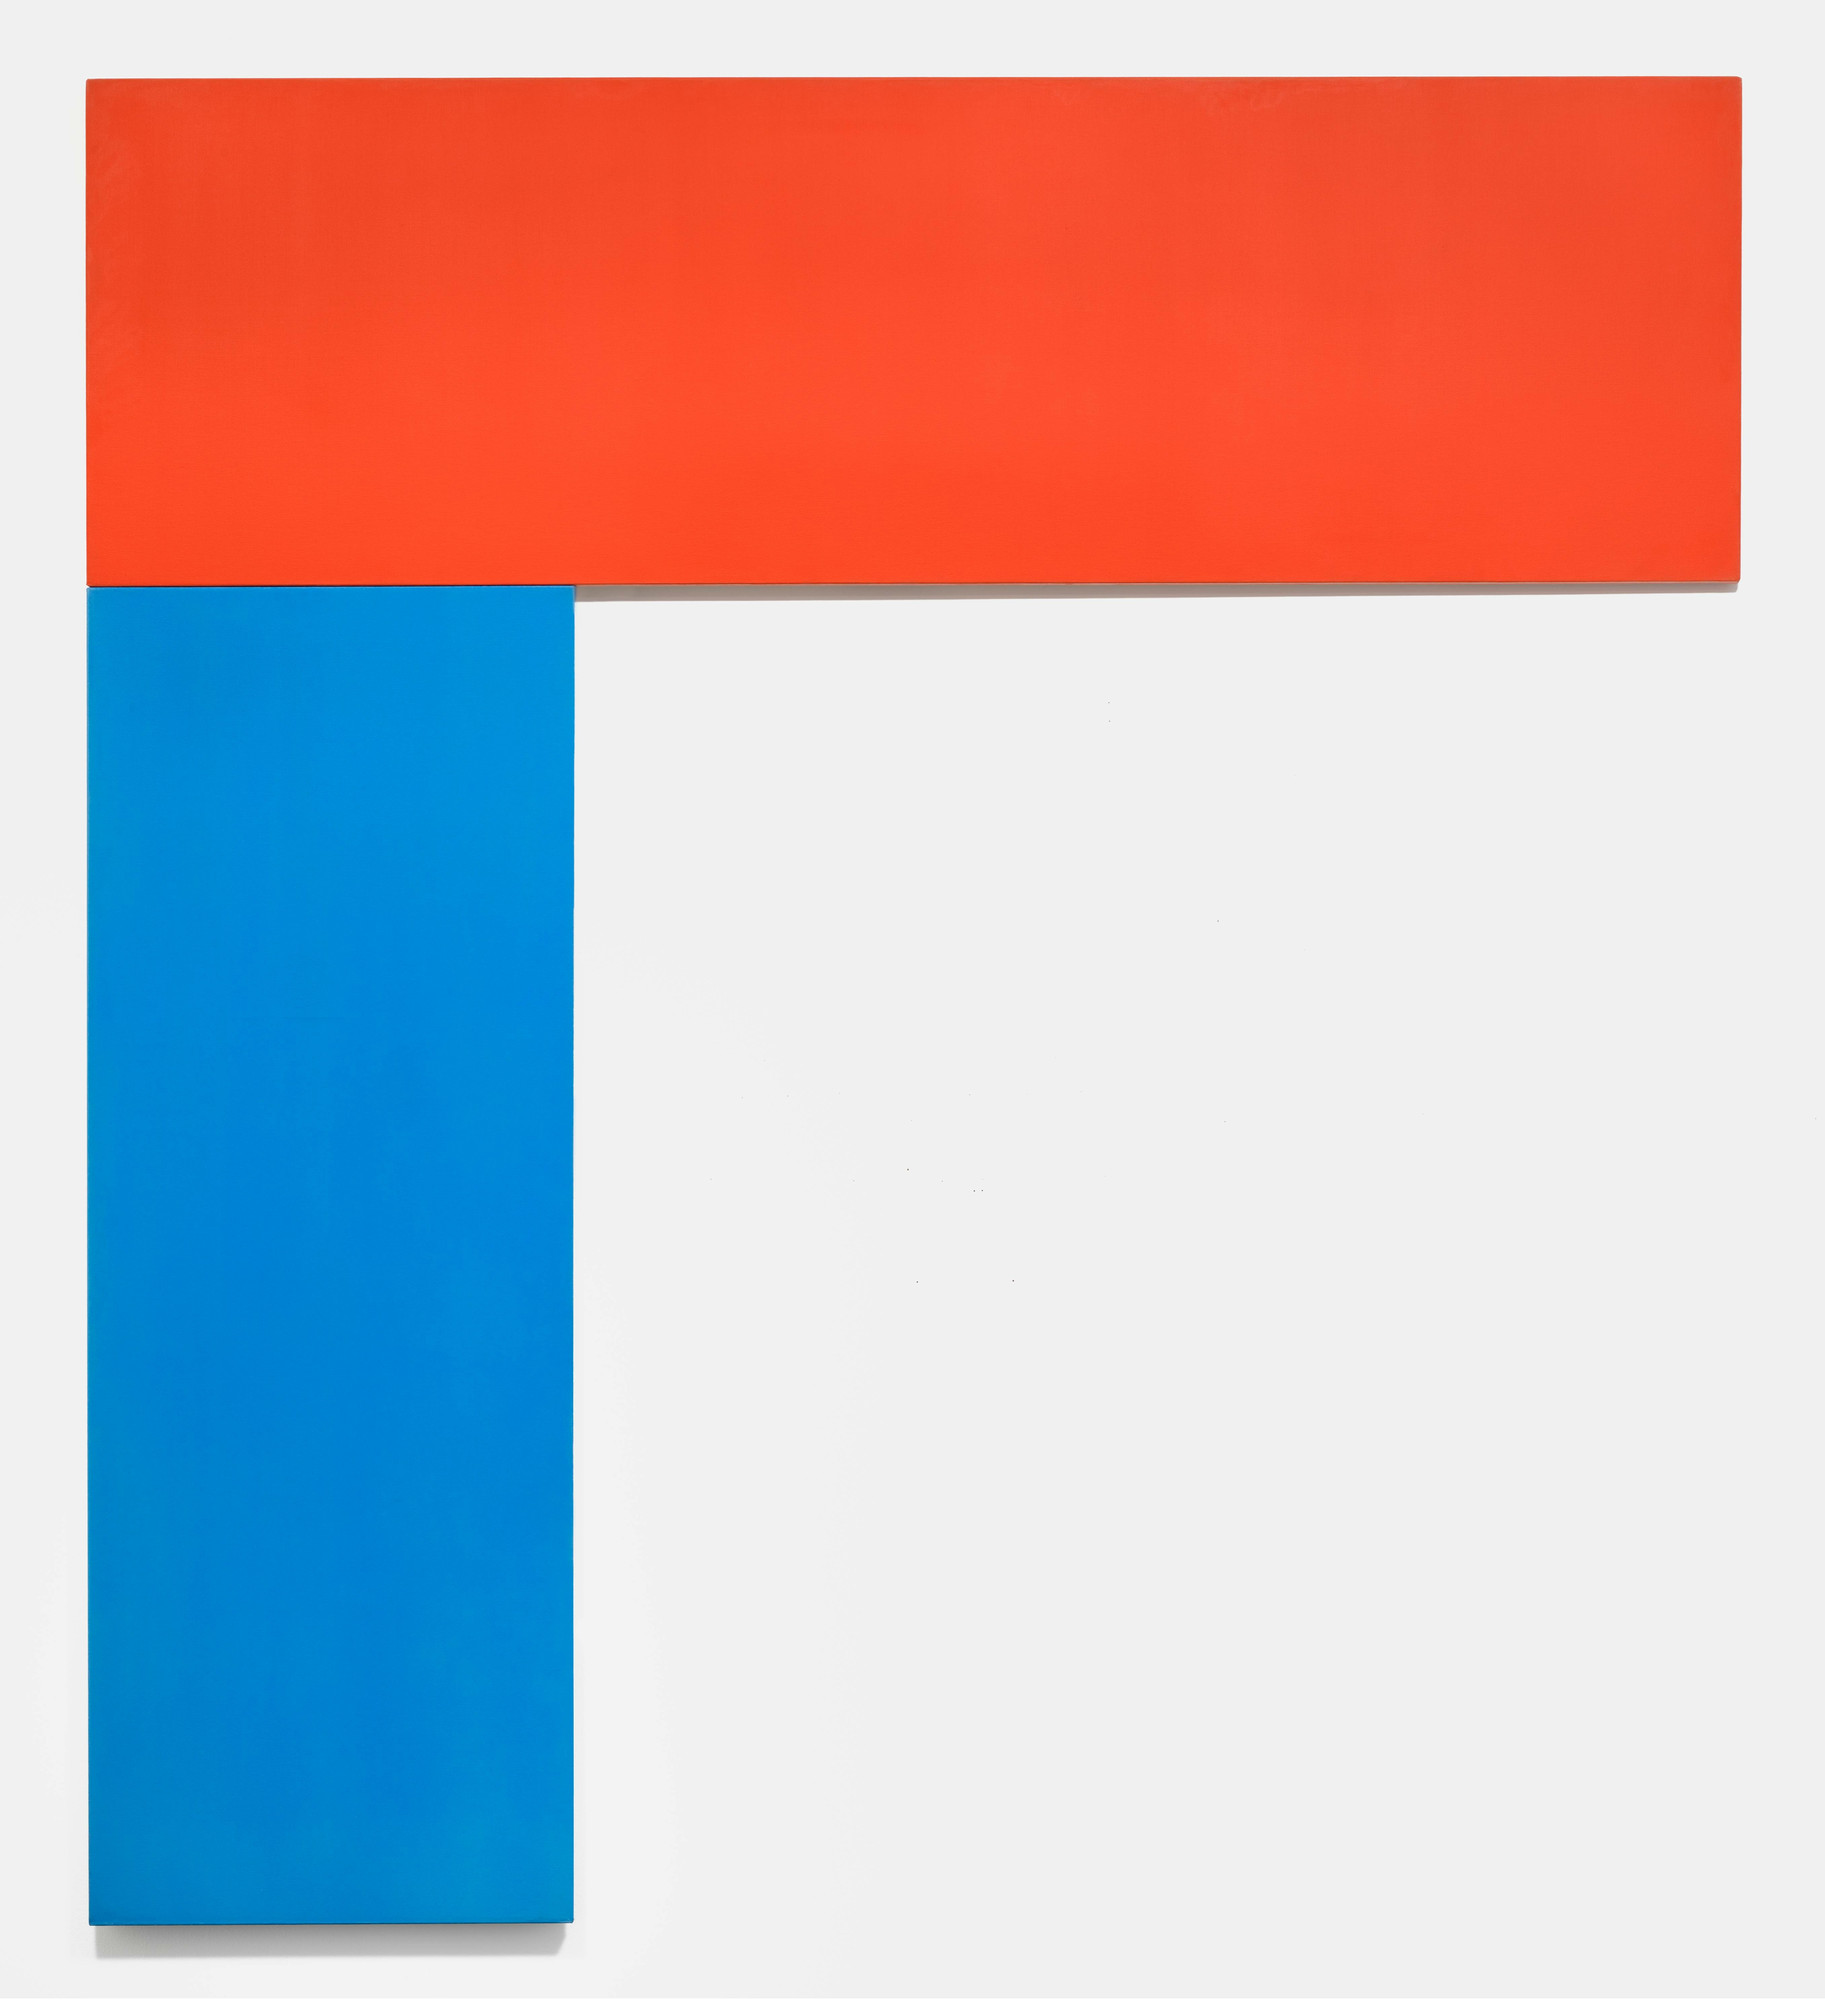 Ellsworth Kelly. *Chatham VI: Red Blue*. 1971. Oil on canvas, two panels, 9' 6 1/2" x 8' 6 1/4" (290.8 x 259.7 cm). Gift of Douglas S. Cramer Foundation. © 2022 Ellsworth Kelly